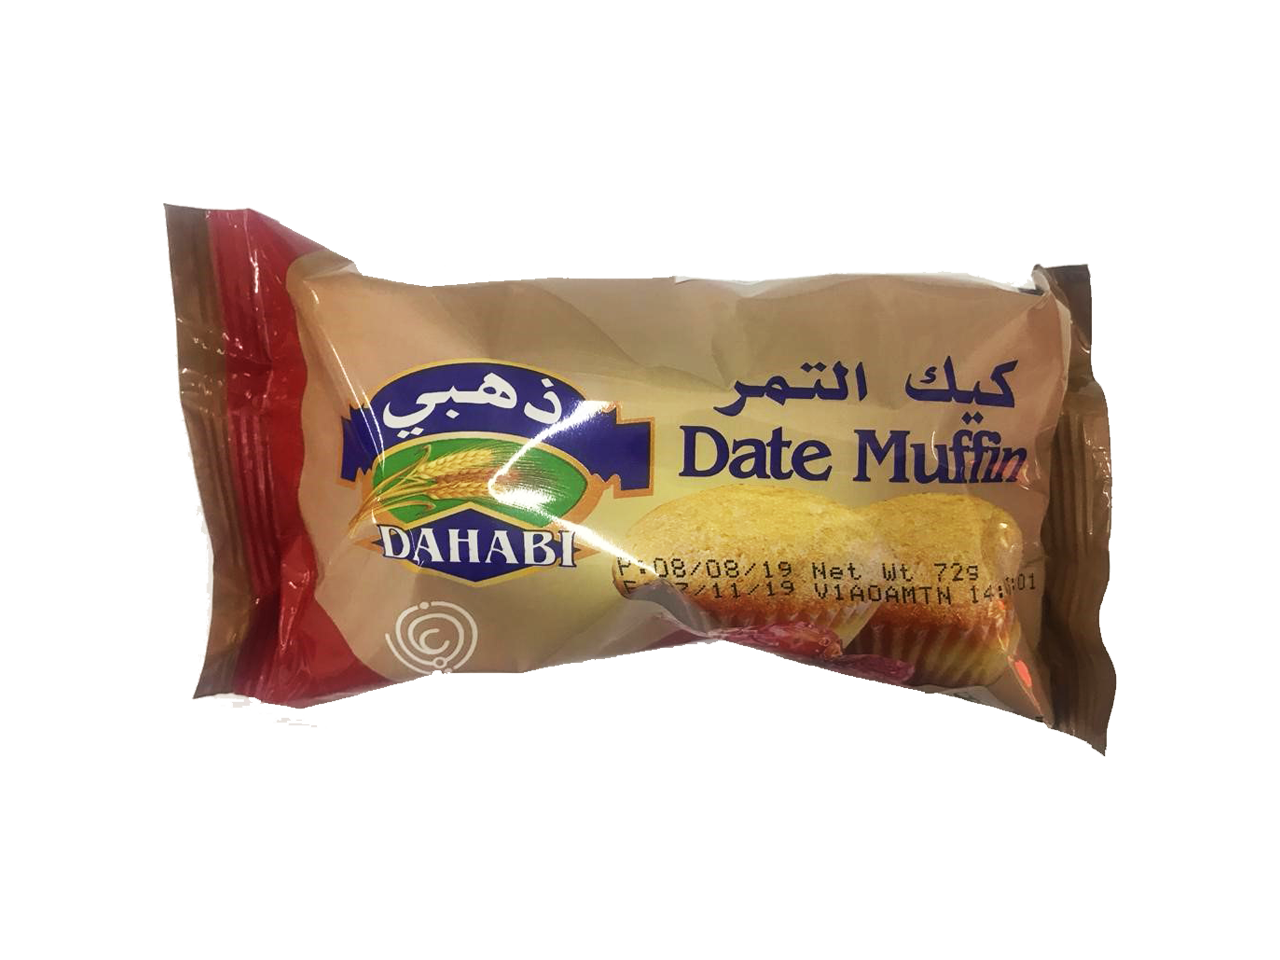 Dahabi - Date Muffin